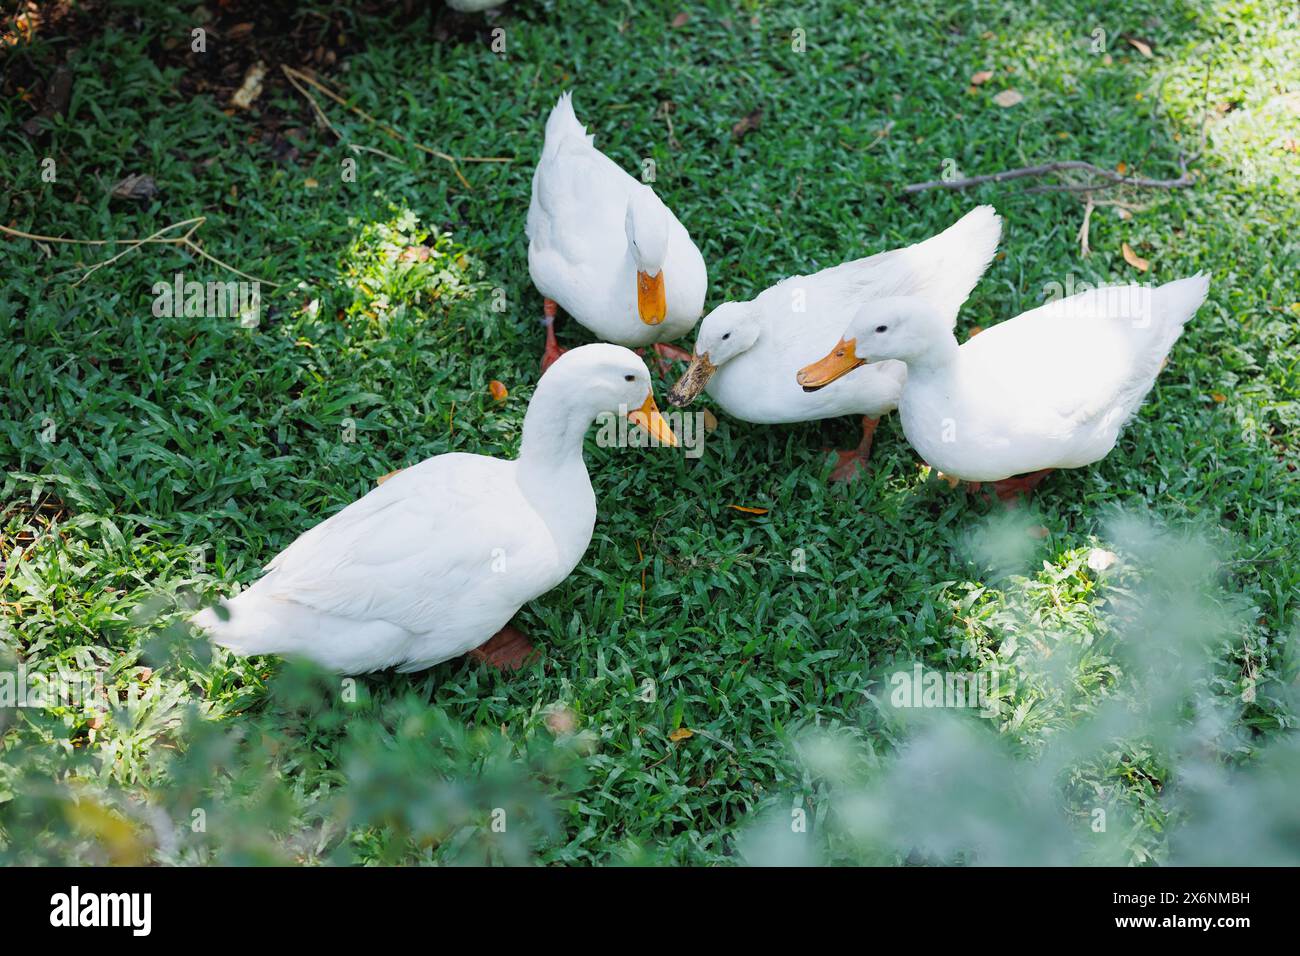 group of call ducks pet in the garden, cute duck aquatic birds on green grass field top view Stock Photo